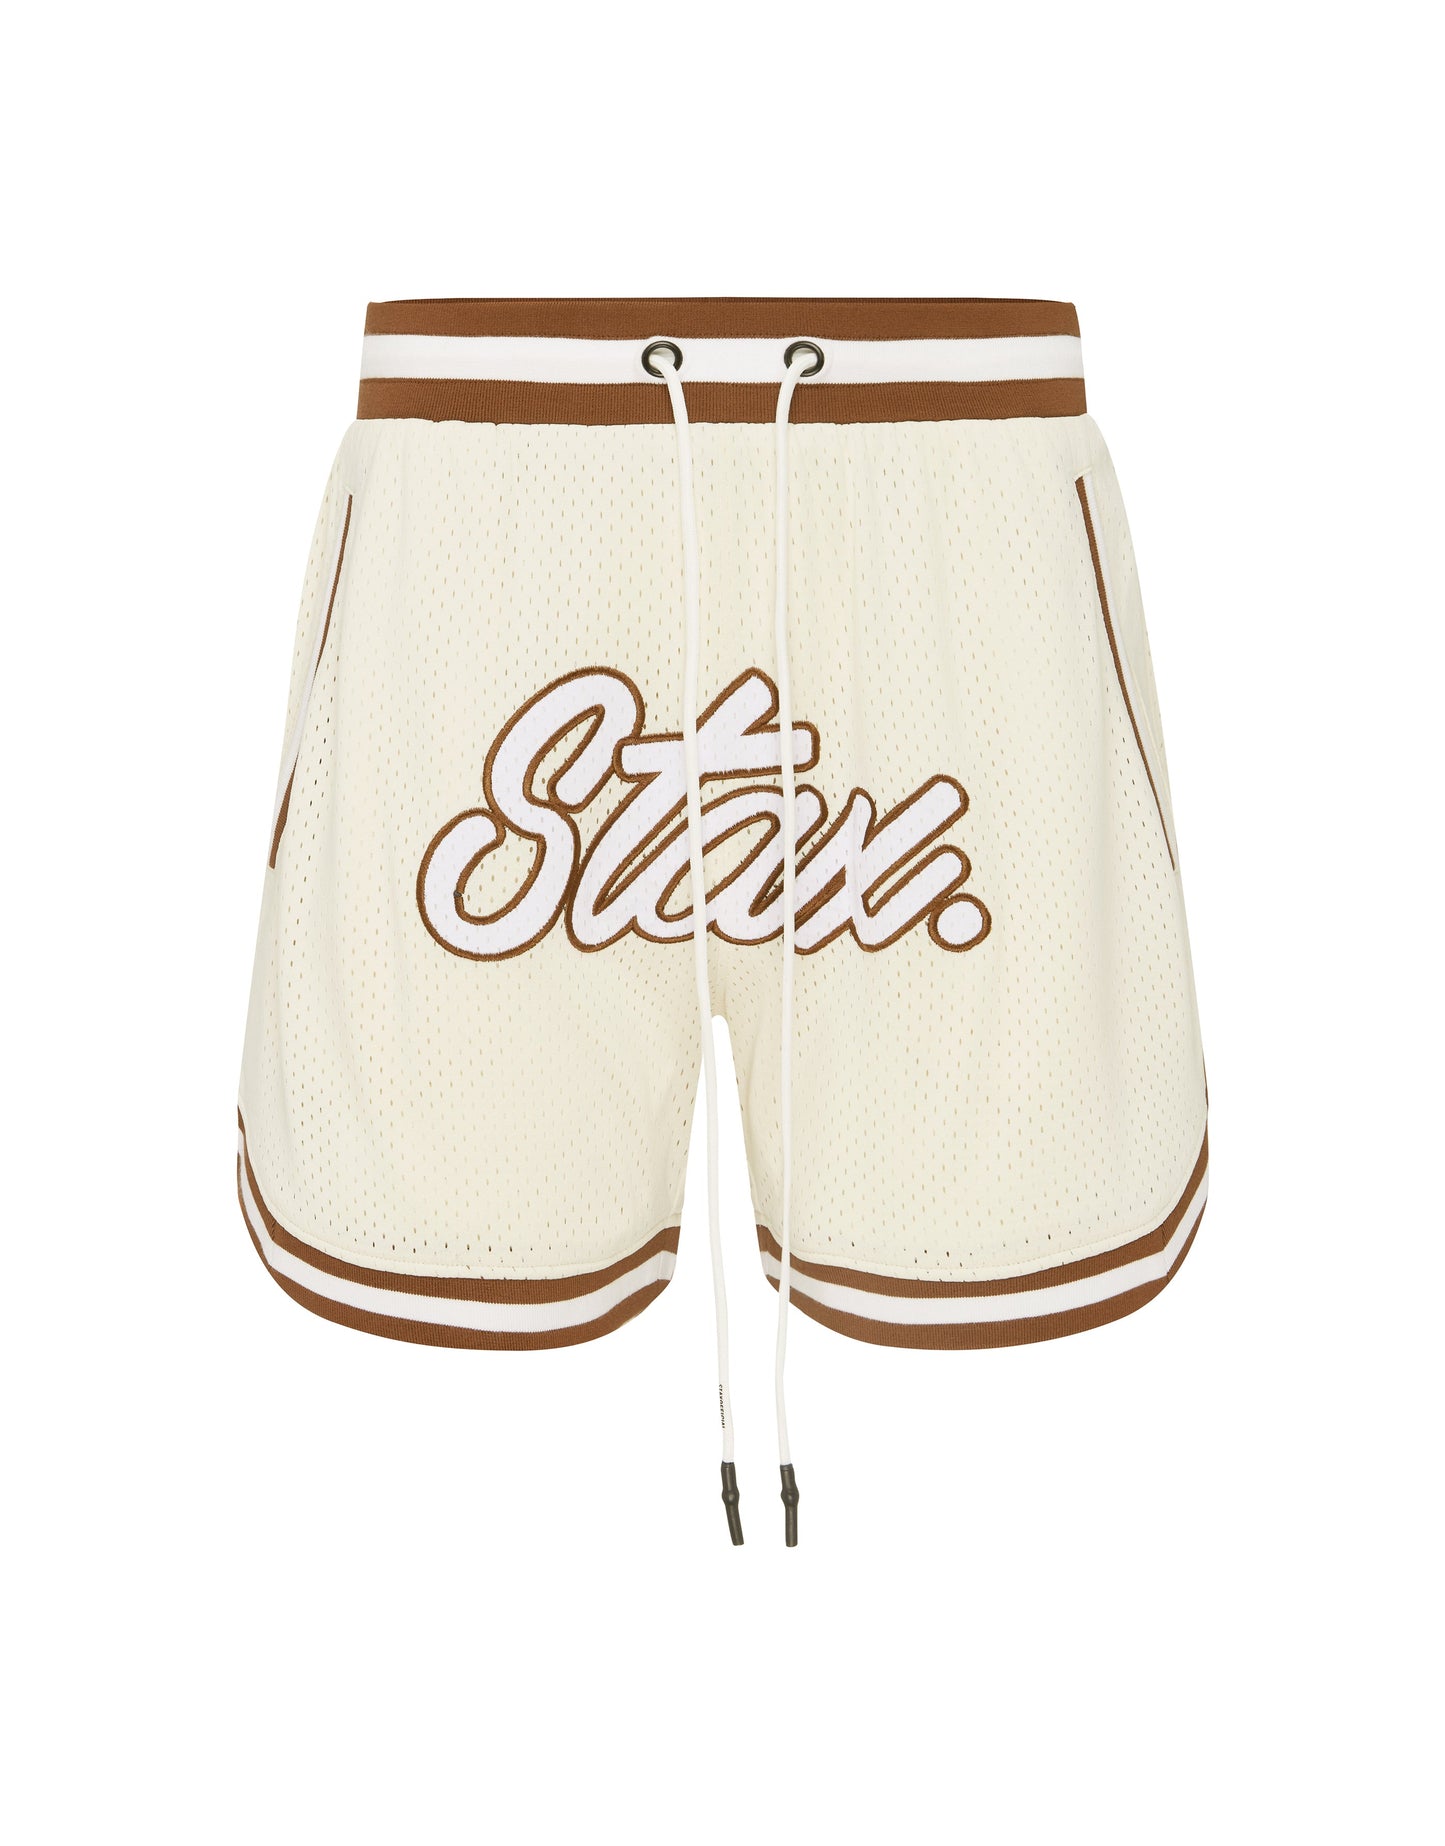 STAX. Court Drip Basketball Shorts - Boston